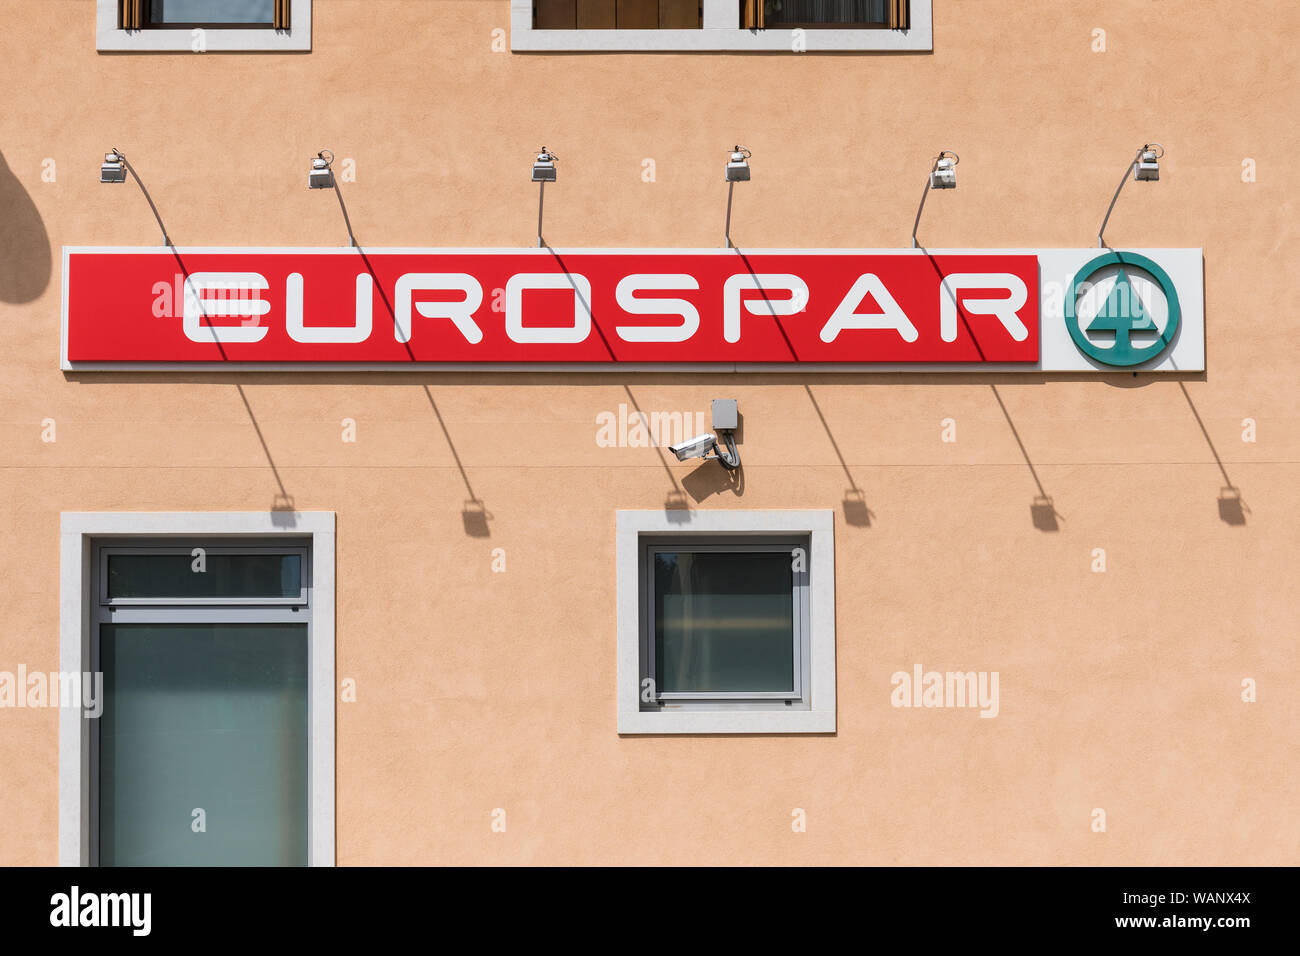 Eurospar supermarket sign, Eurospar logo - Palmanova, Italy Stock Photo